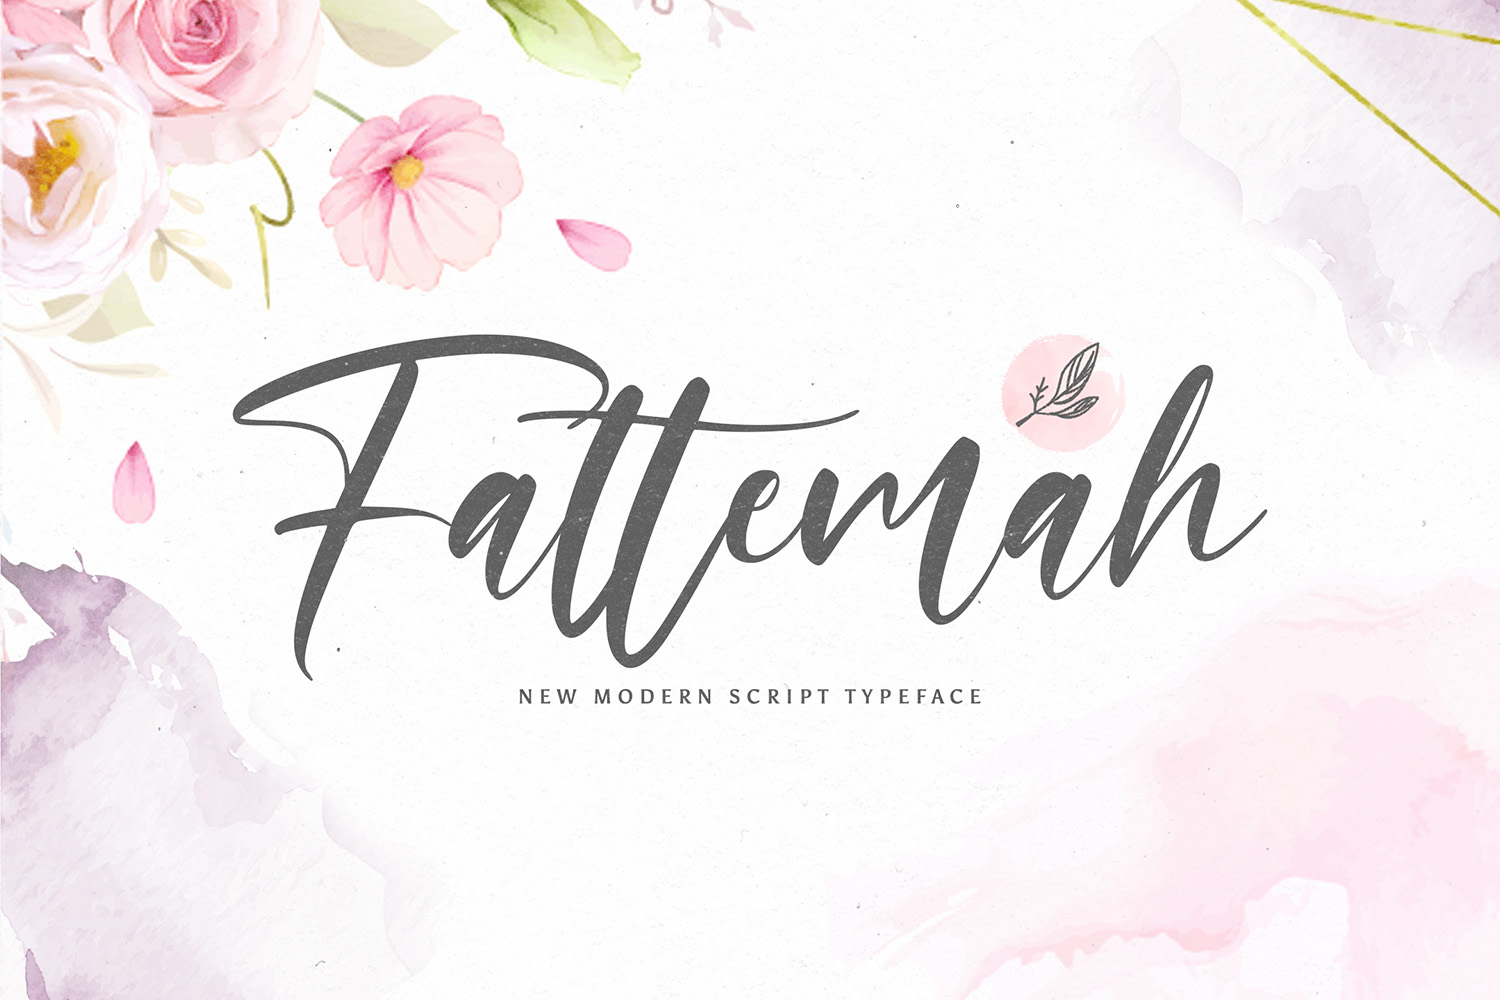 Fattemah Free Font